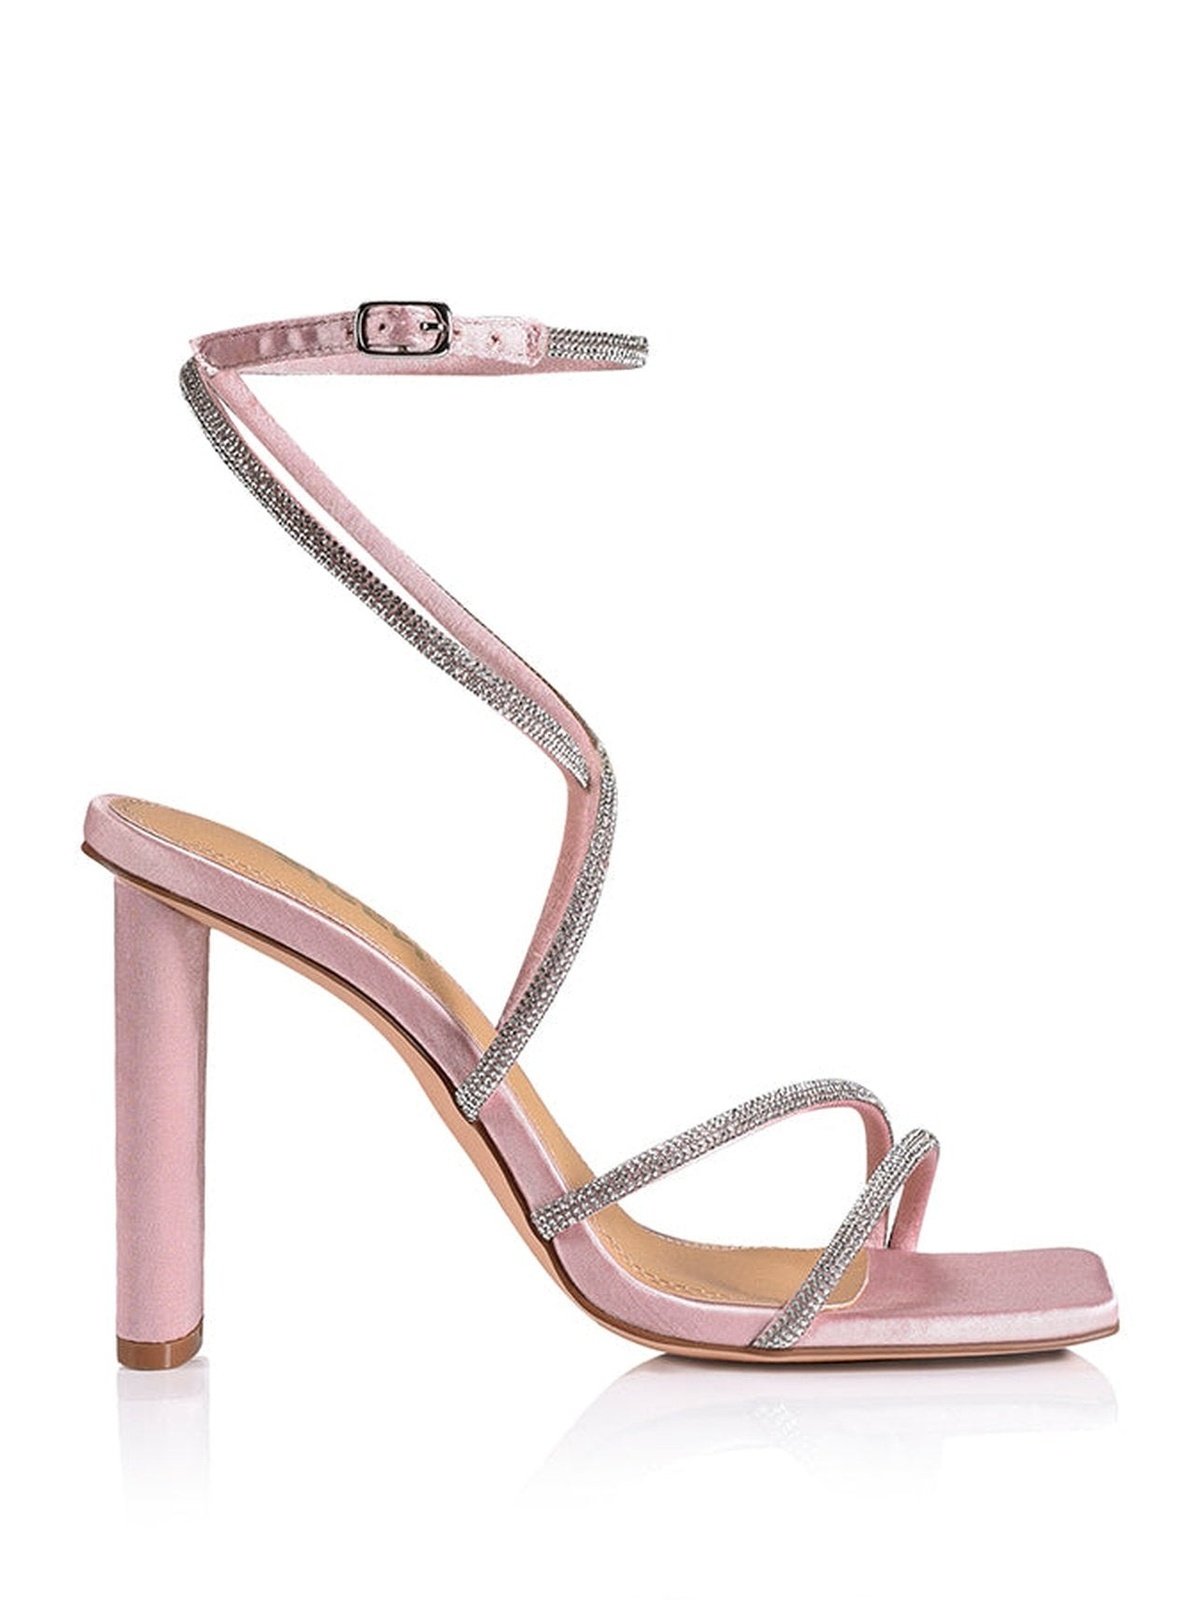 Pia Block Heel Sandals - Pink Satin/ Glitter